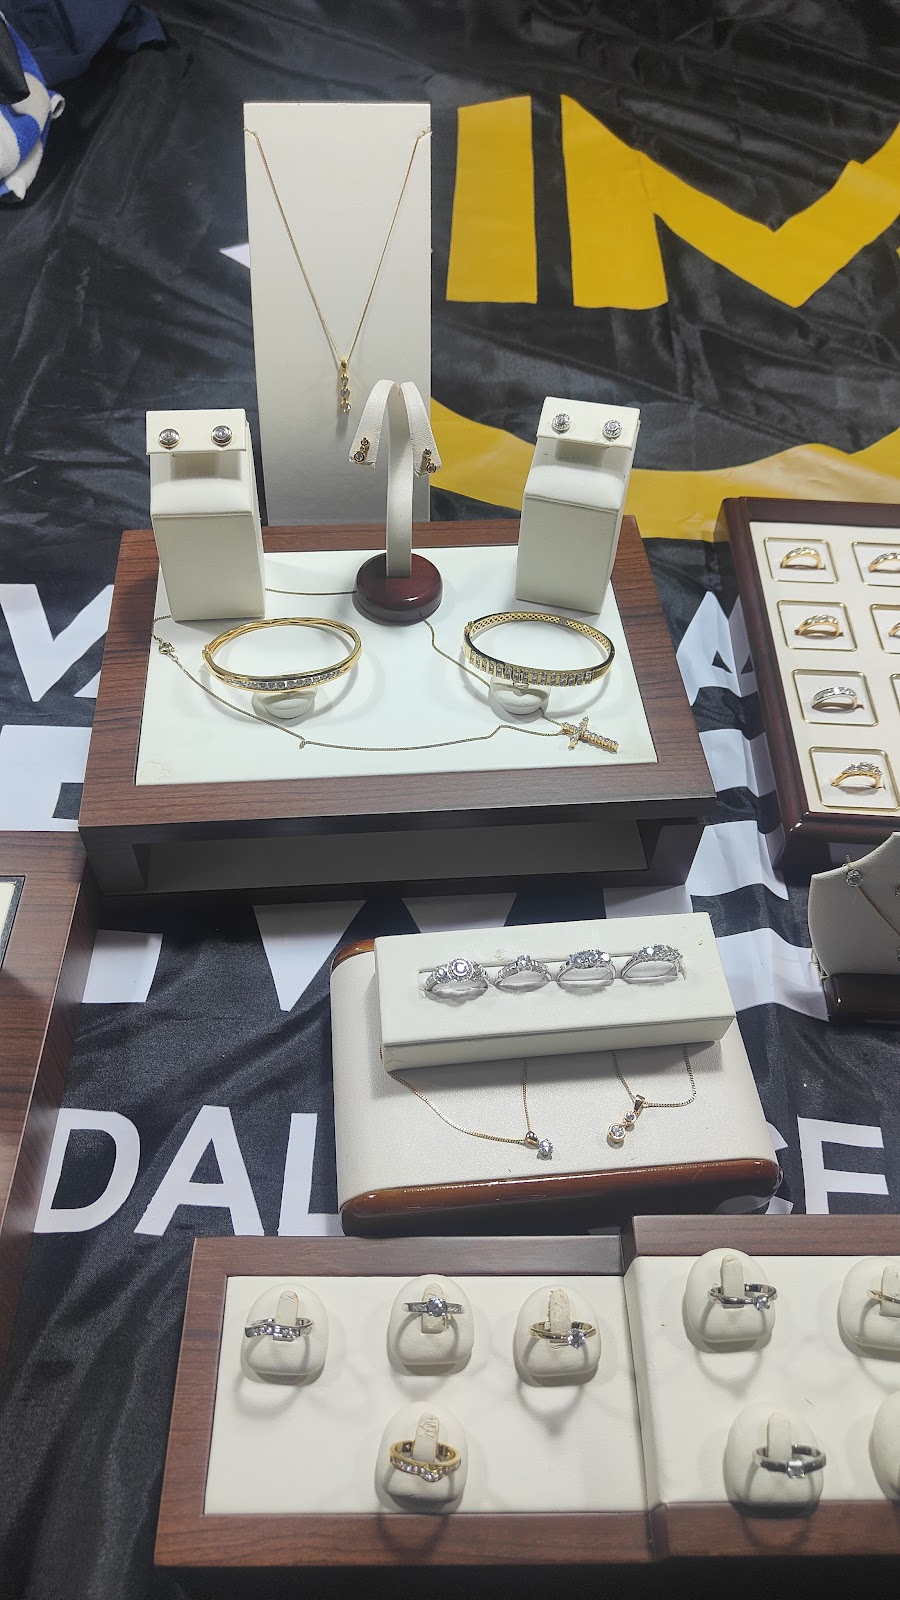 IMJ Ivan Mandelik Jeweller | jewelry store | Rosemeadow Dr, Gwandalan NSW 2259, Australia | 0415252858 OR +61 415 252 858